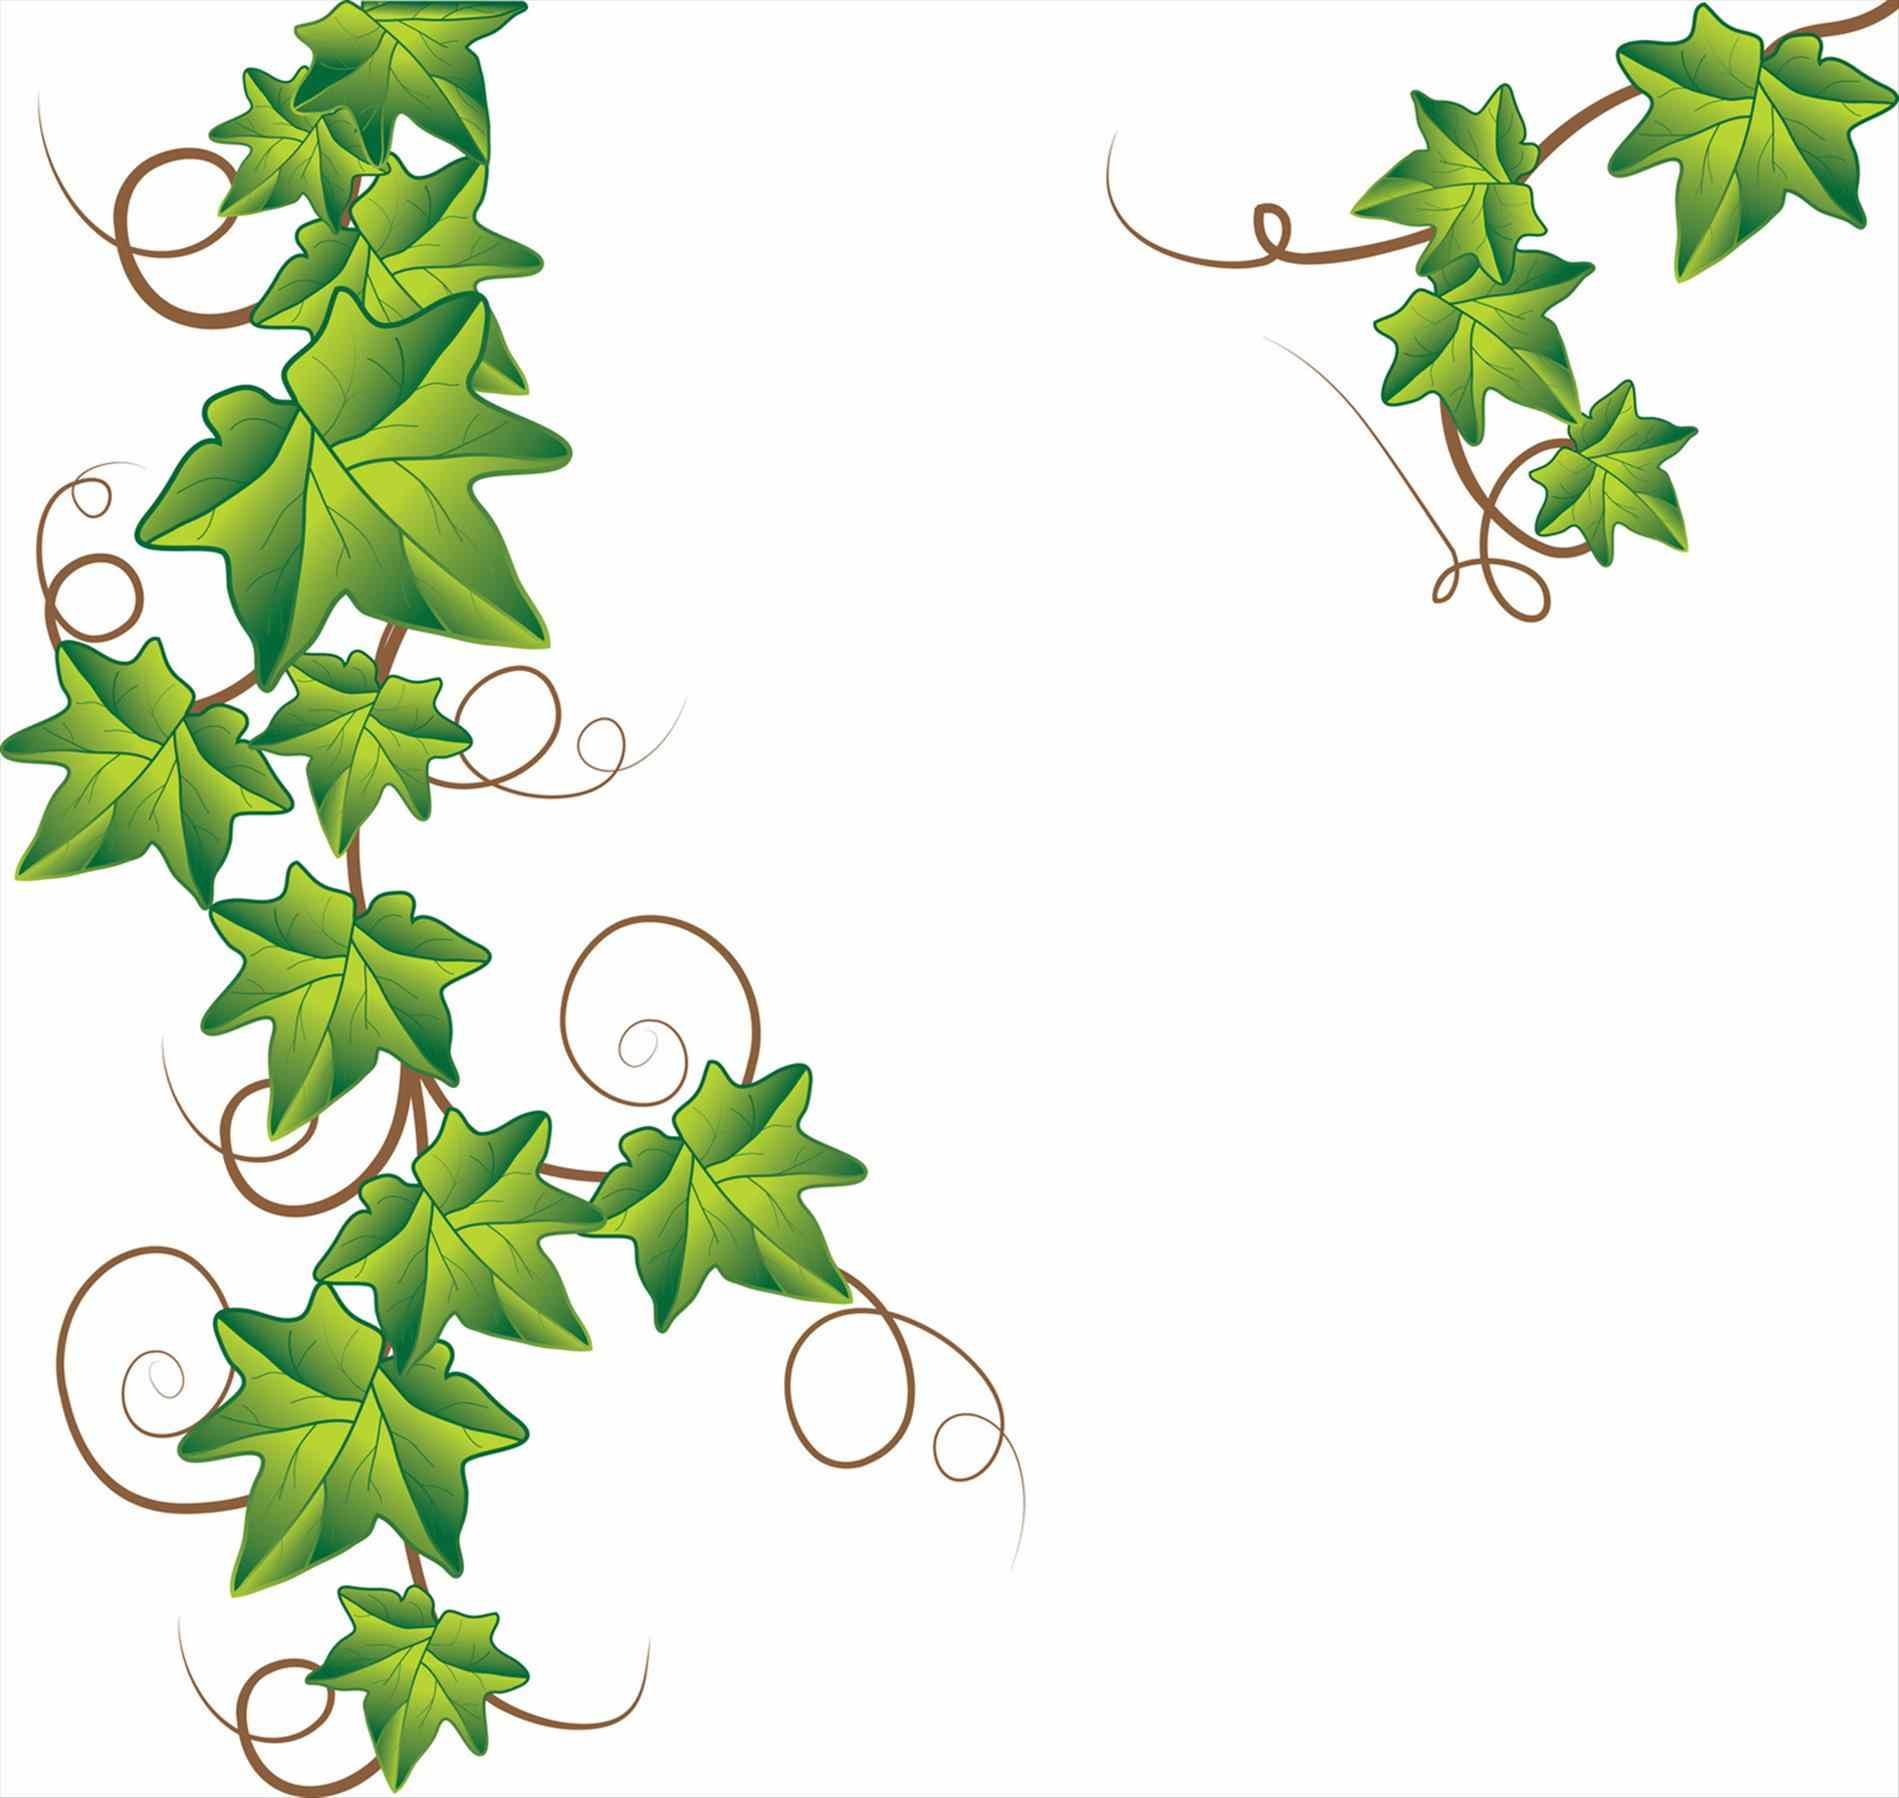 Ivy poison ivy.